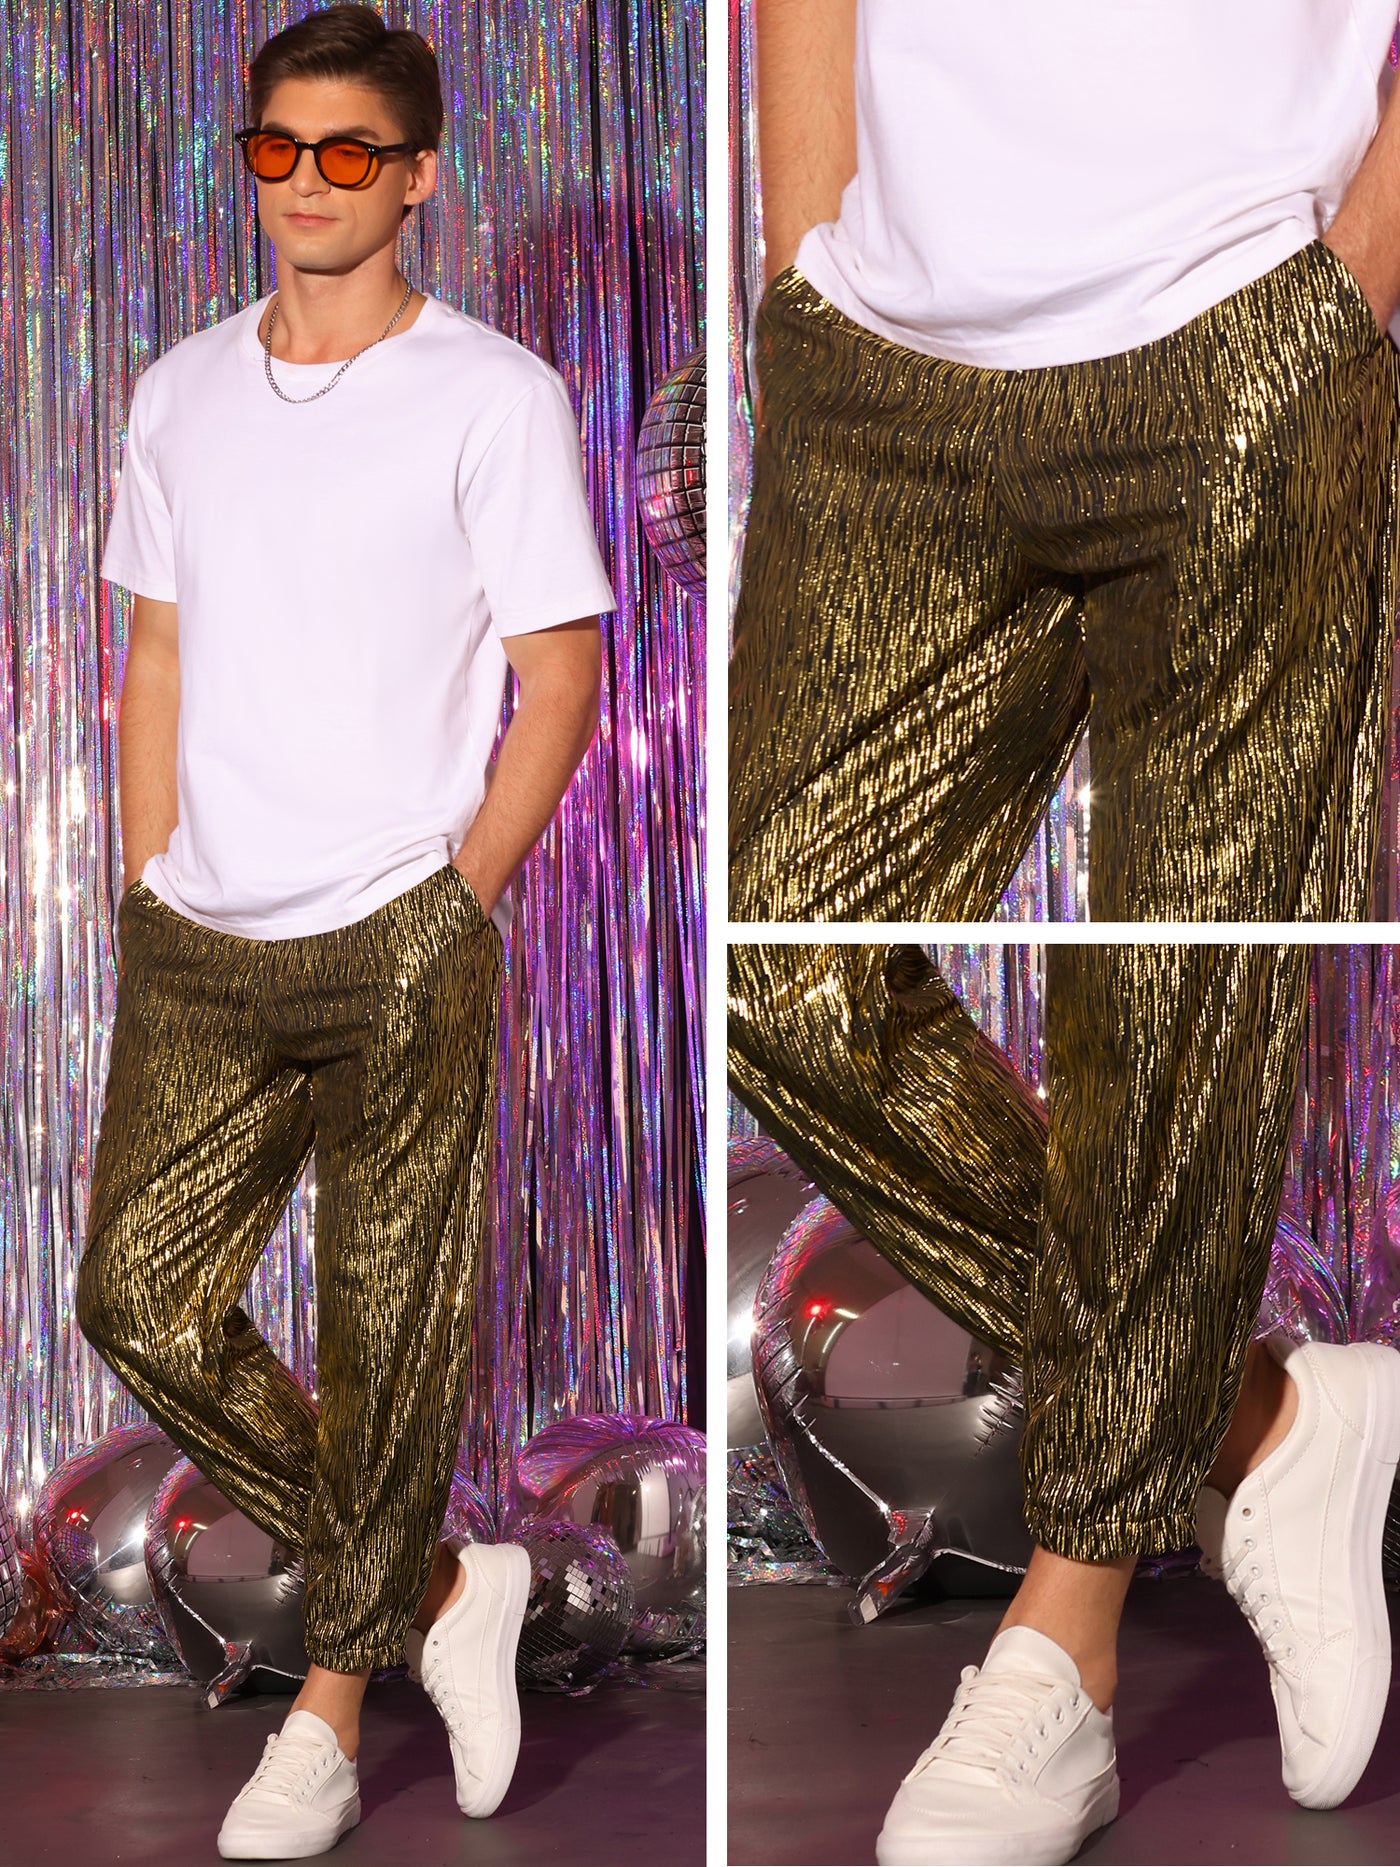 Bublédon Metallic Jogger Pants for Men's Contrast Color Drawstring Waist Disco Party Shiny Trousers